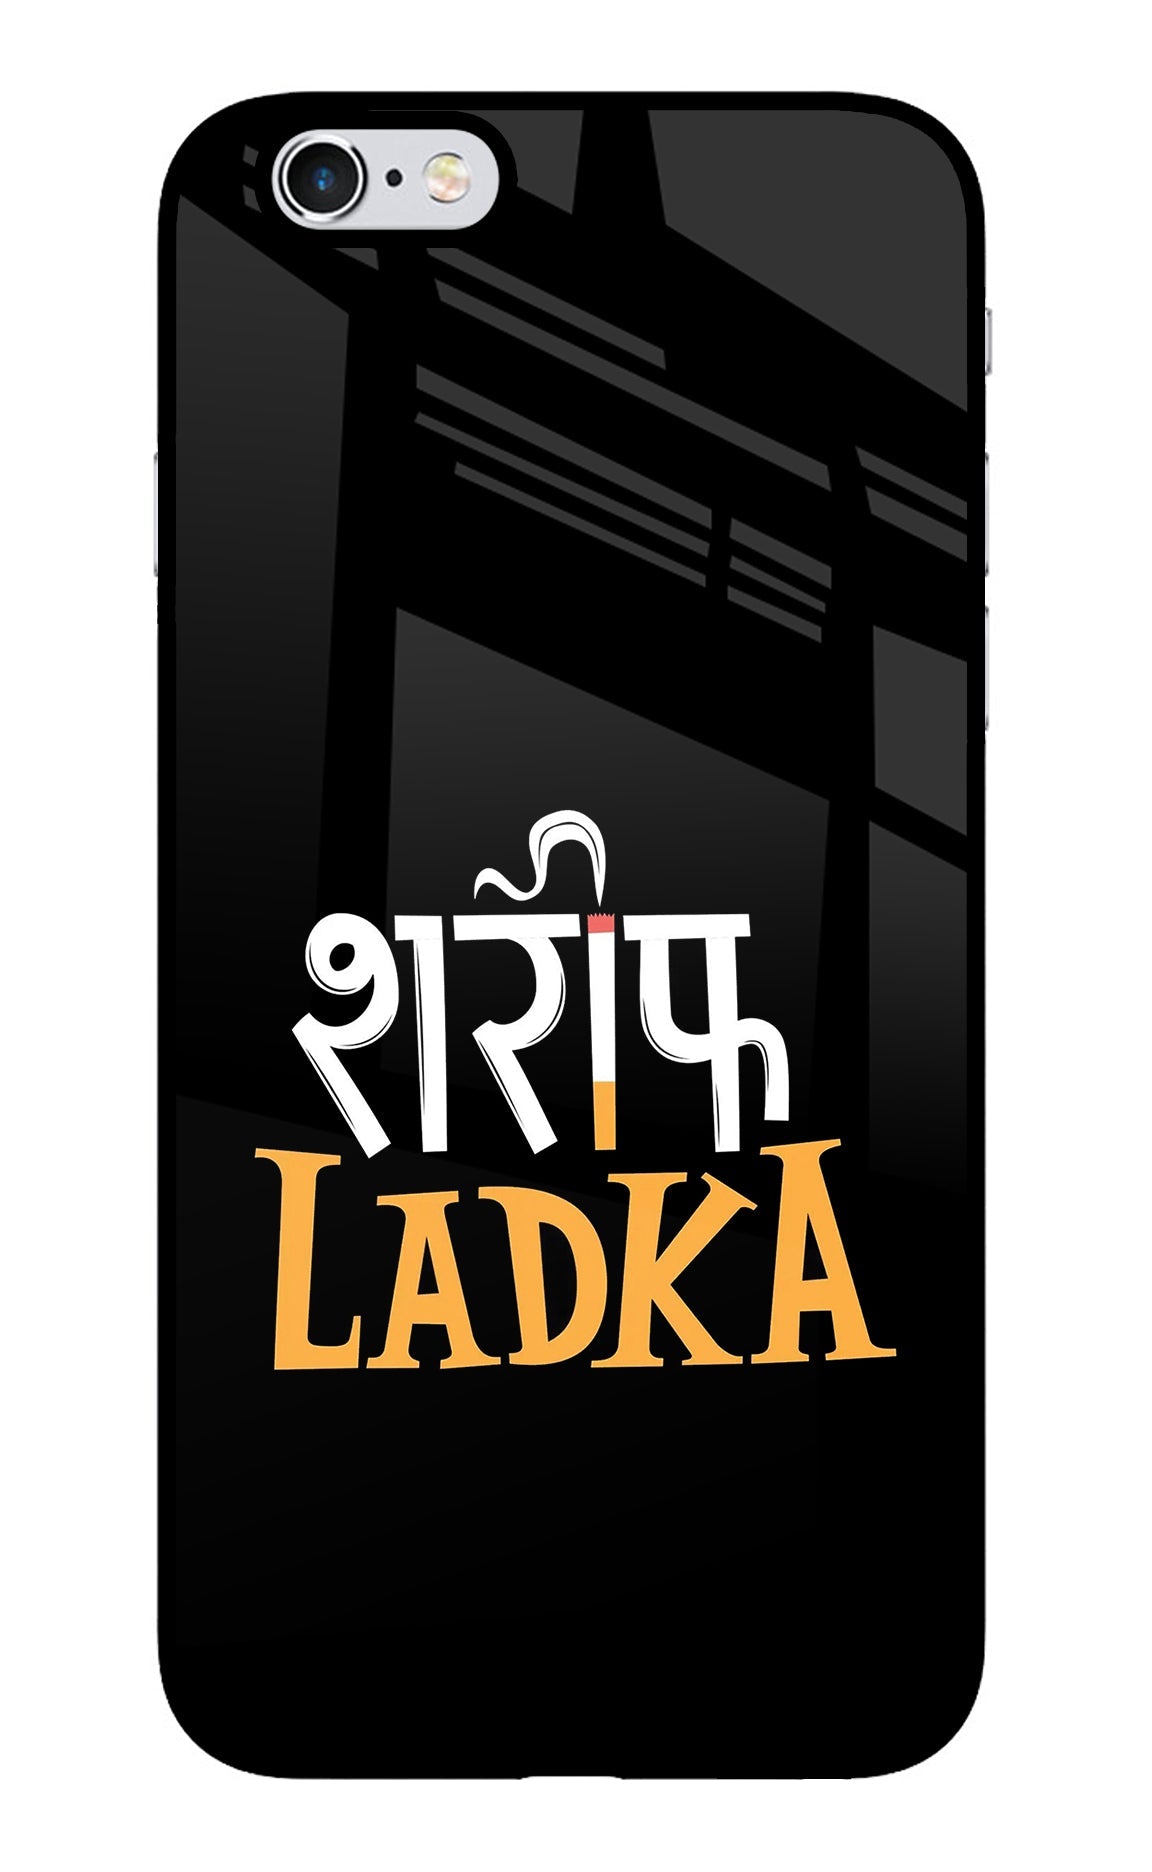 Shareef Ladka iPhone 6/6s Glass Case